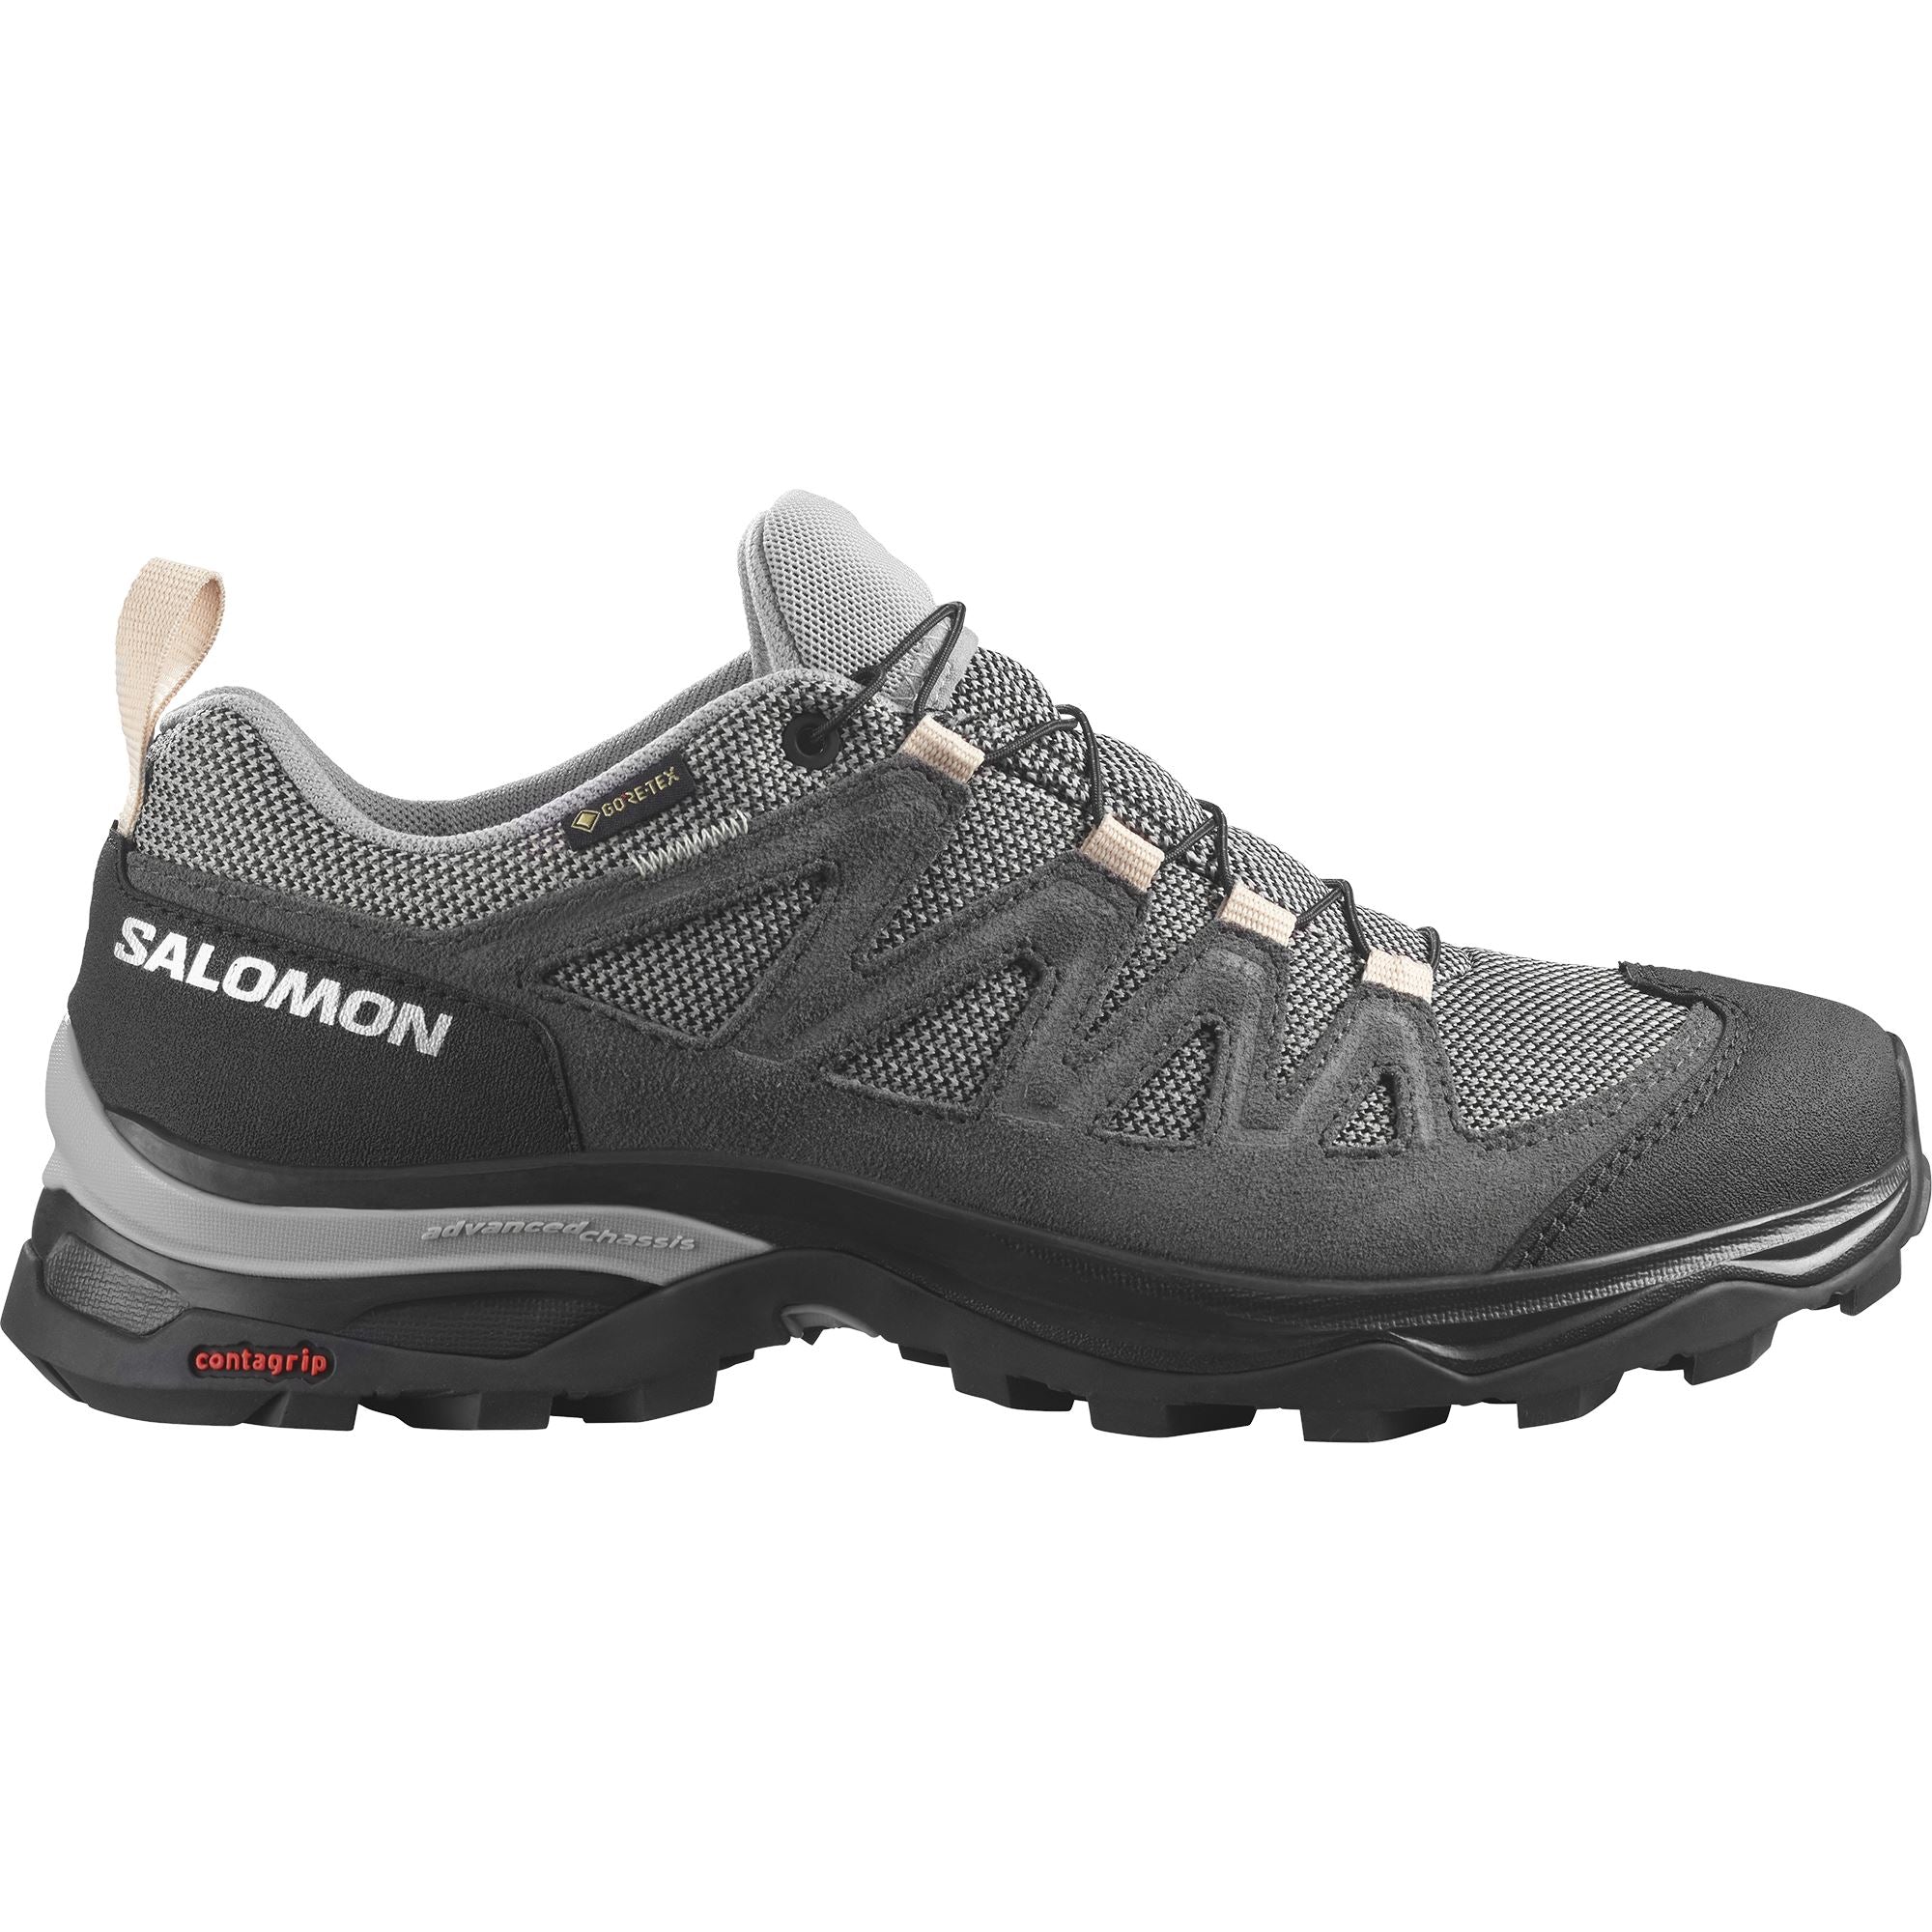 Salomon X Ward Leather Gore-Tex Women's Leather Hiking Shoes Gull/Black/Ebony US 7 